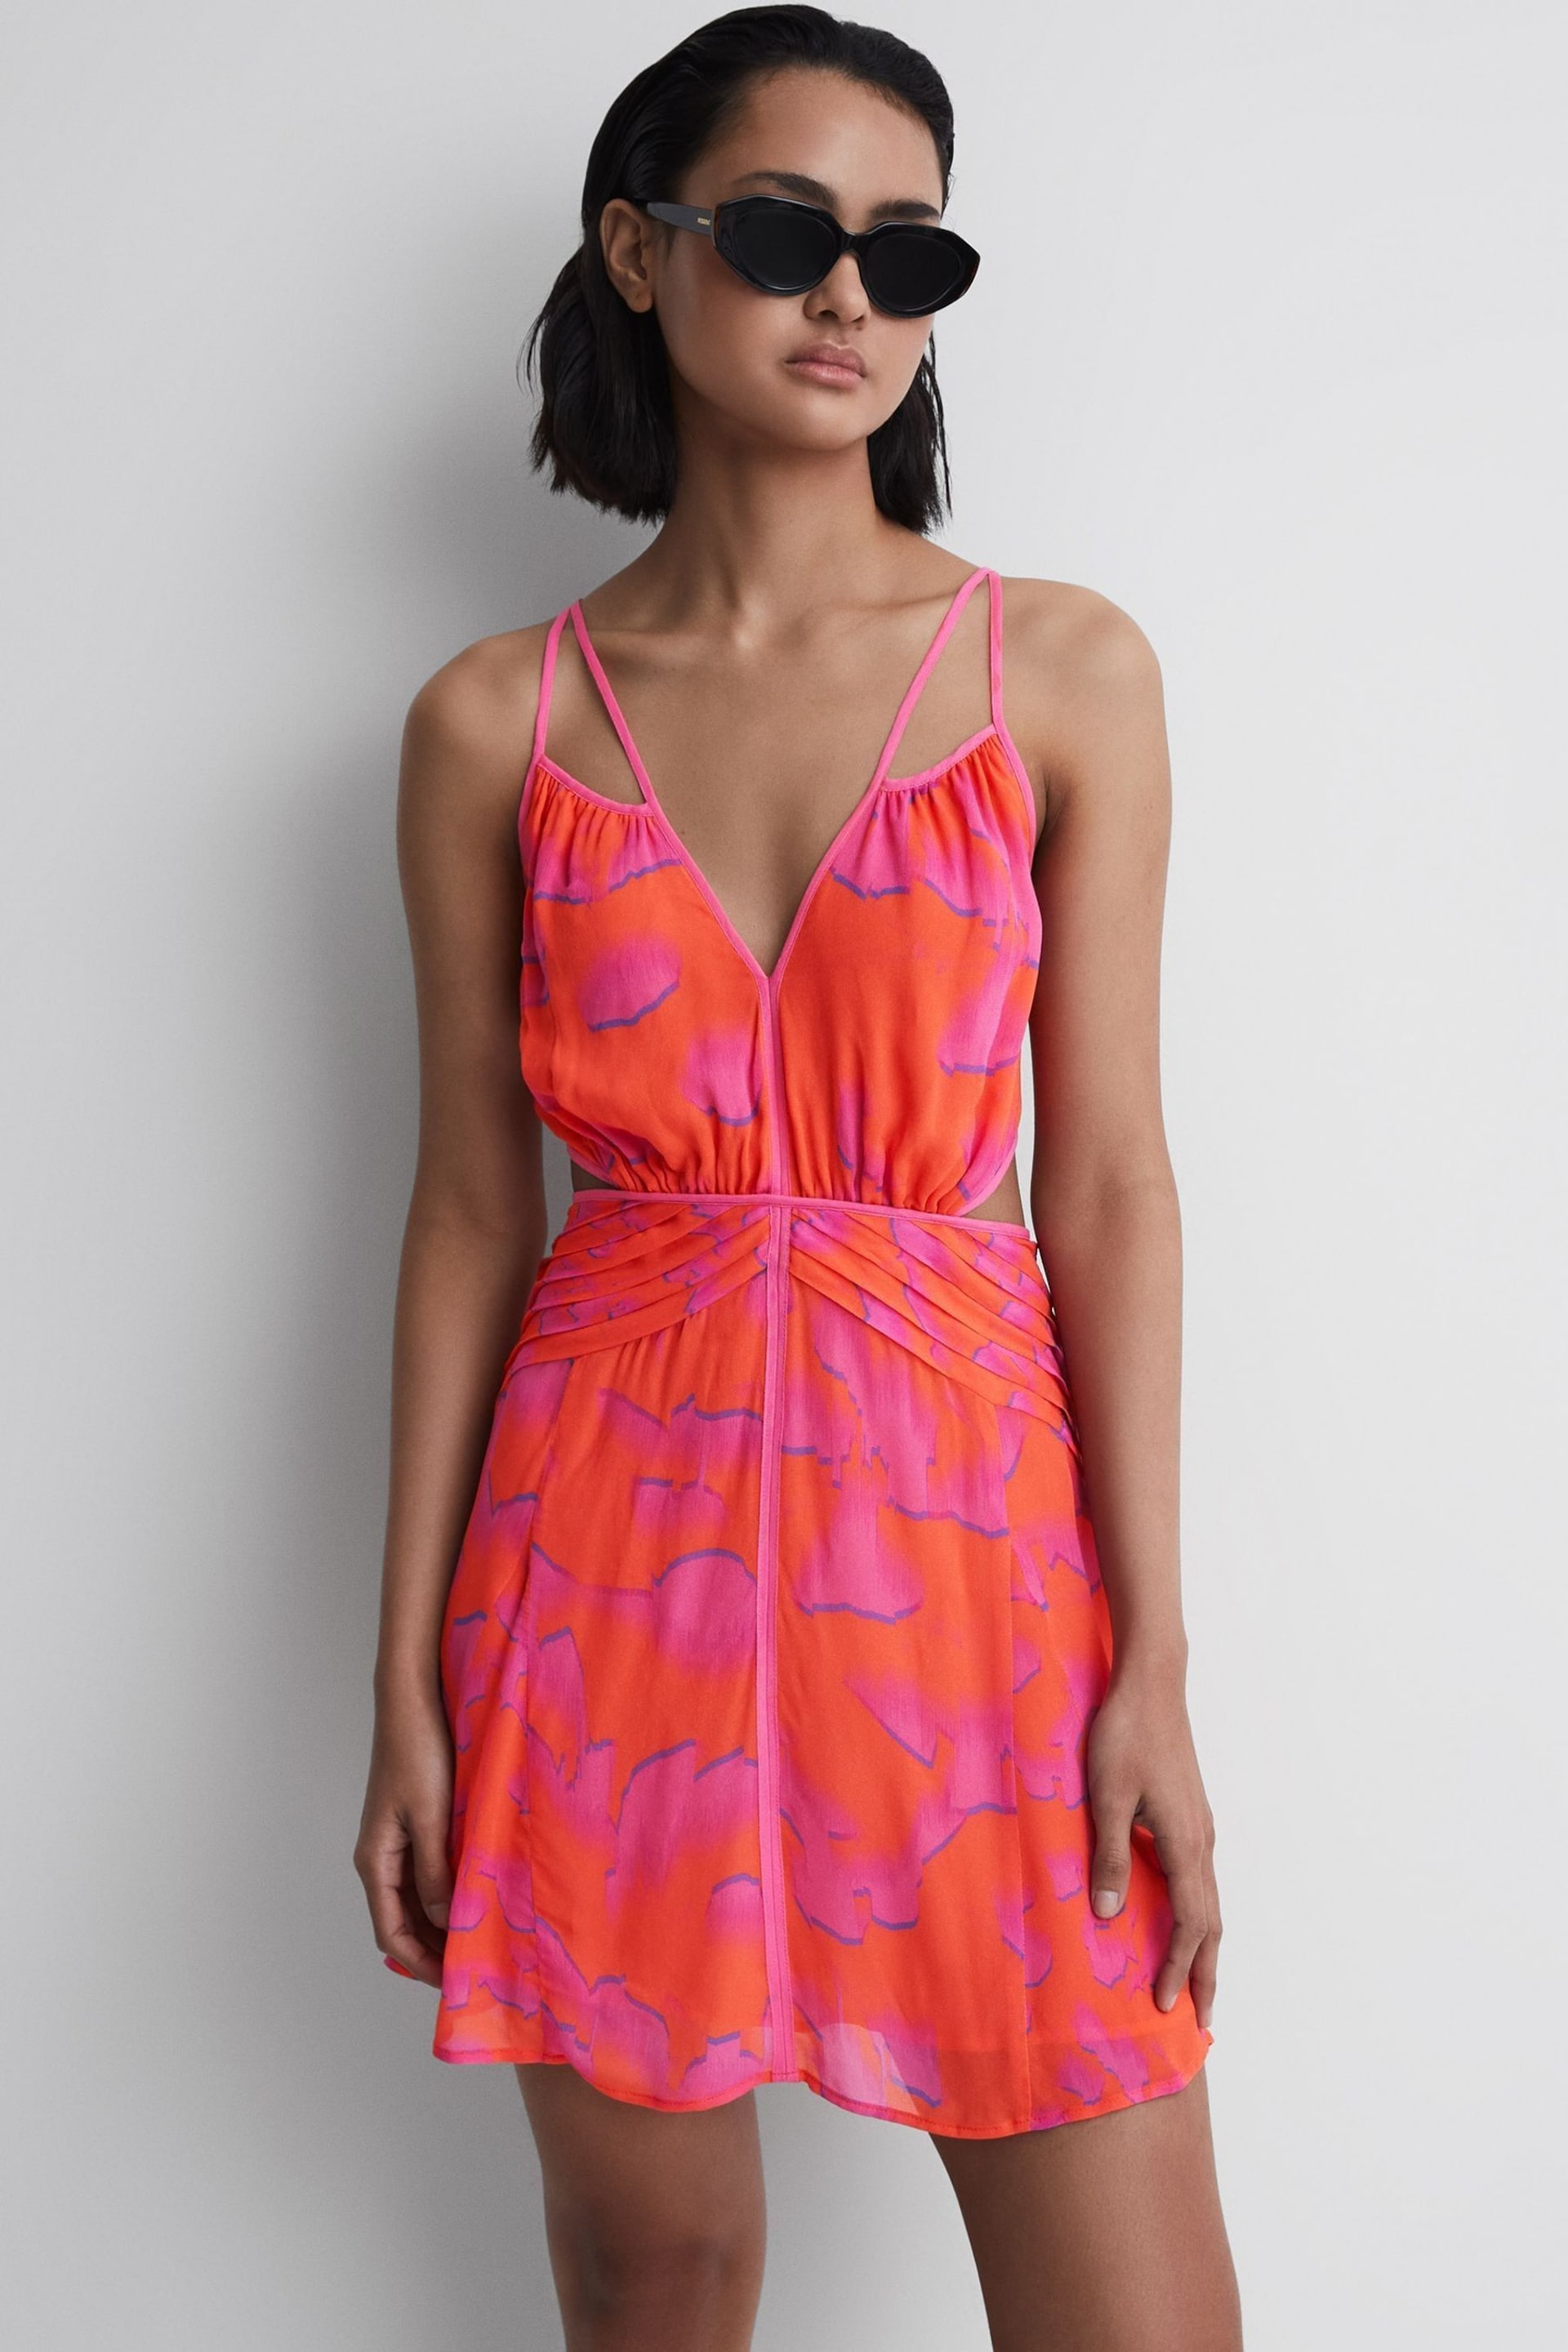 Reiss Orange/Pink Abilene Plunge Neckline Resort Mini Dress - Image 3 of 5